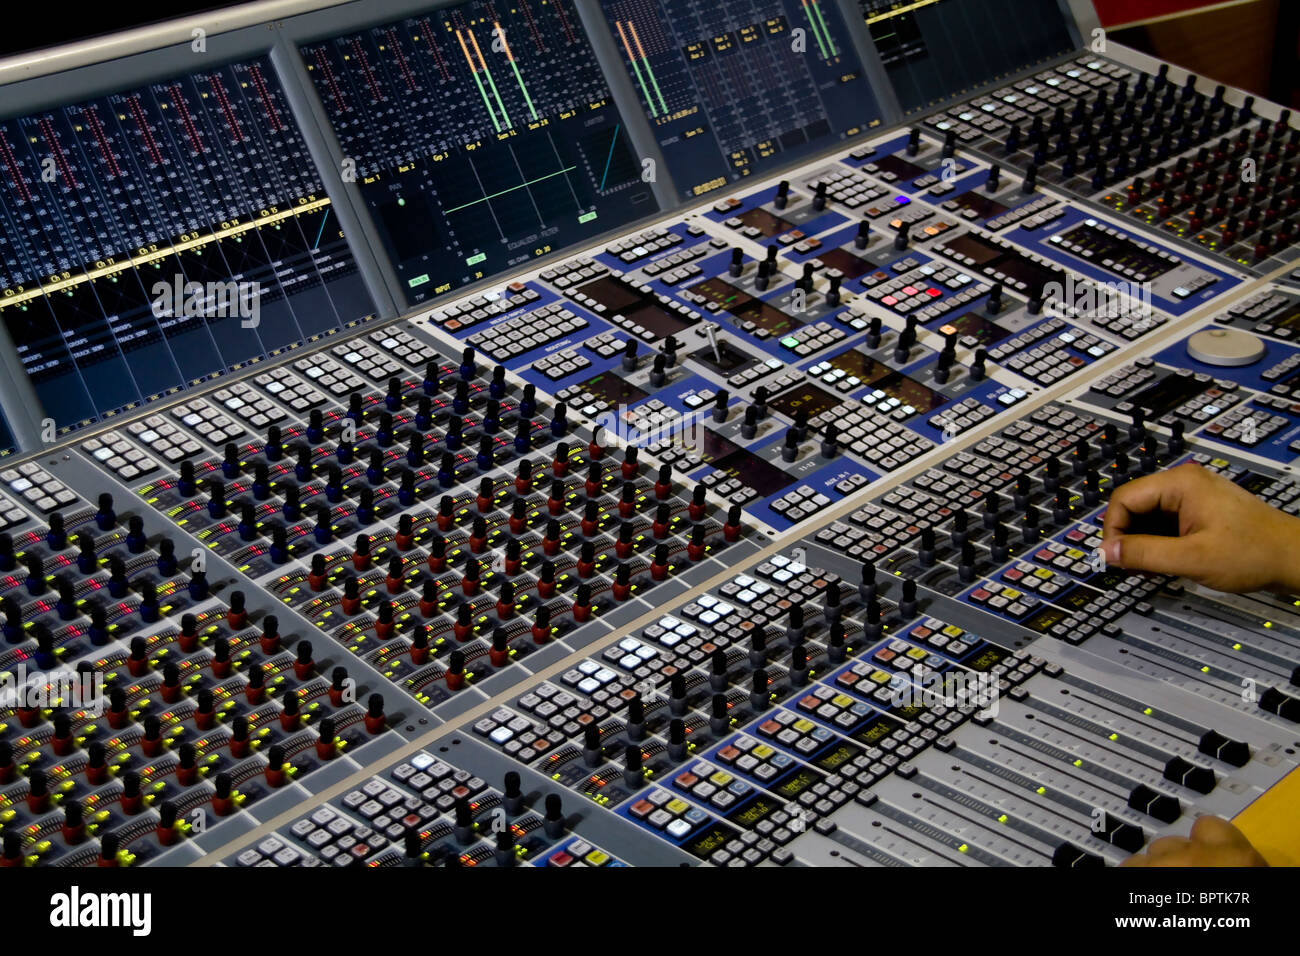 professional audio mixer desk at the studio Stock Photo - Alamy